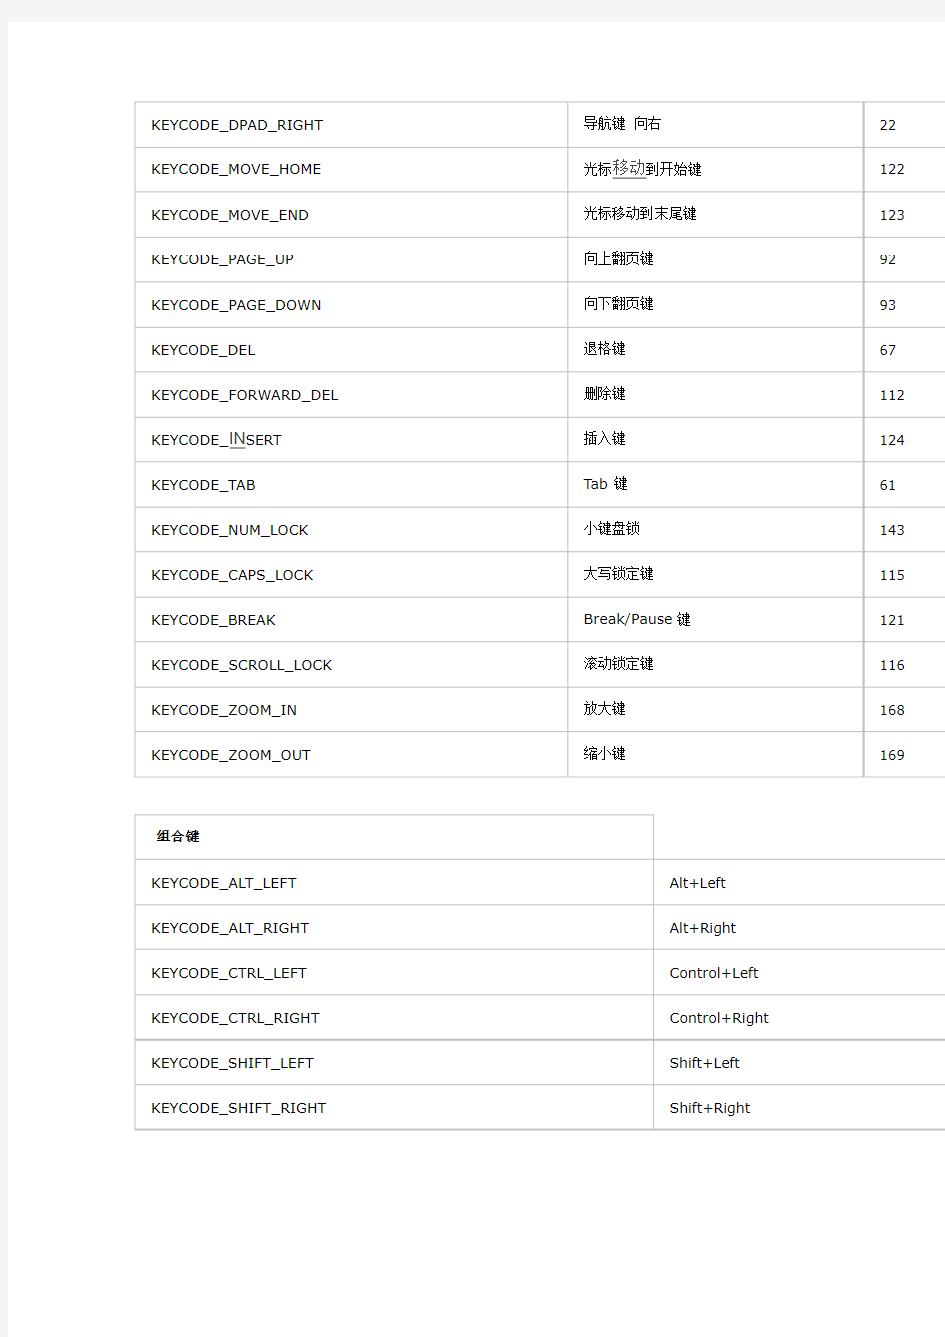 Android 键盘键名和键值列表